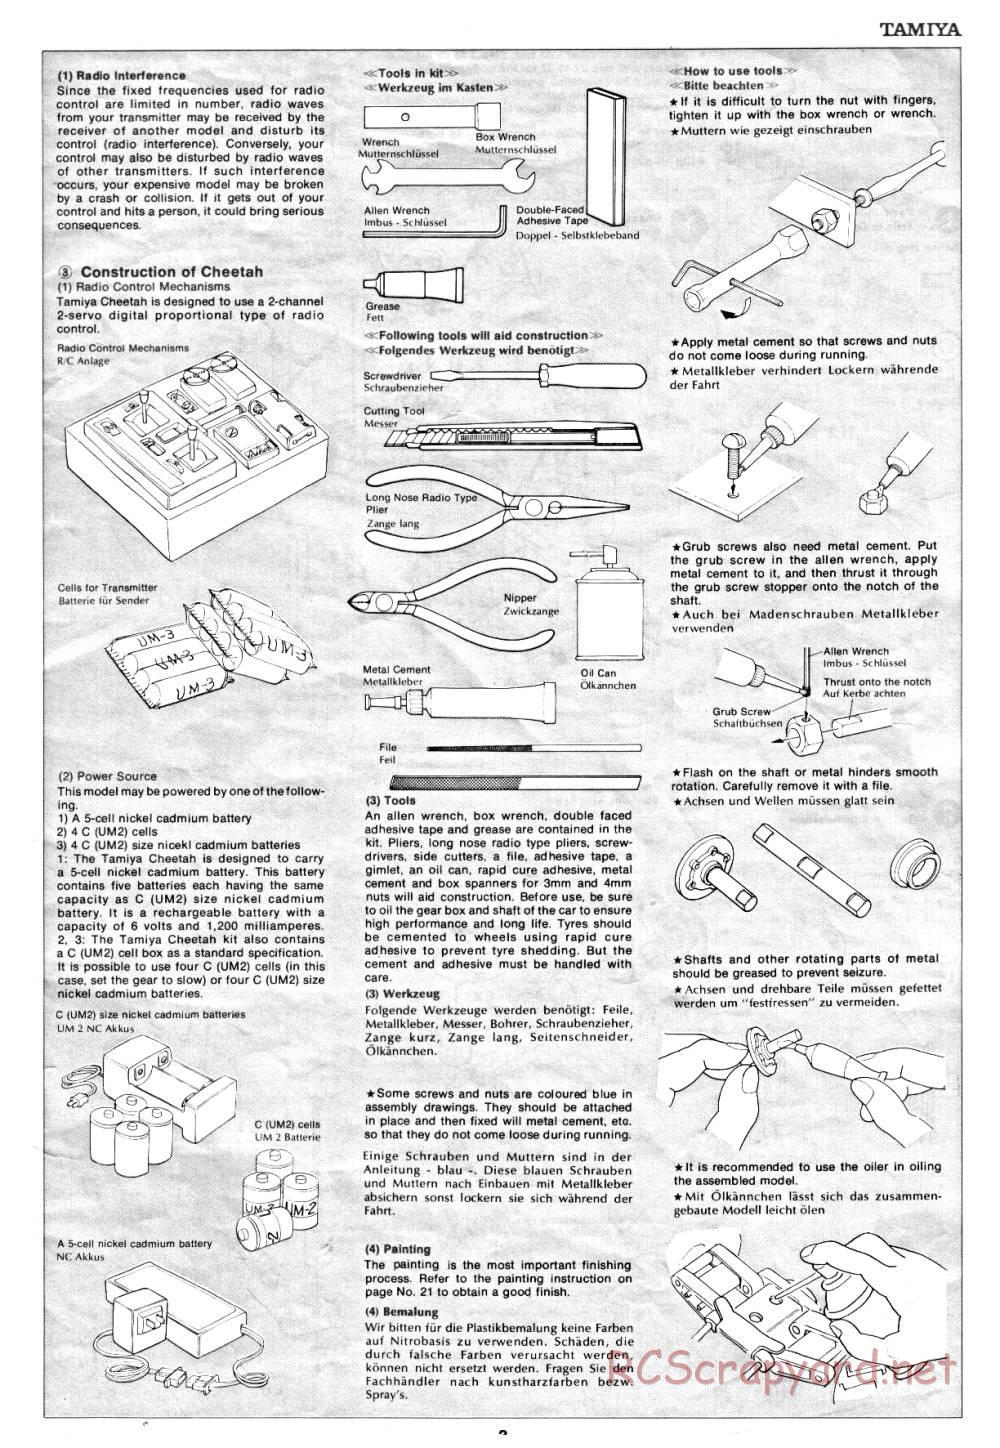 Tamiya - Lamborghini Cheetah - 58007 - Manual - Page 3